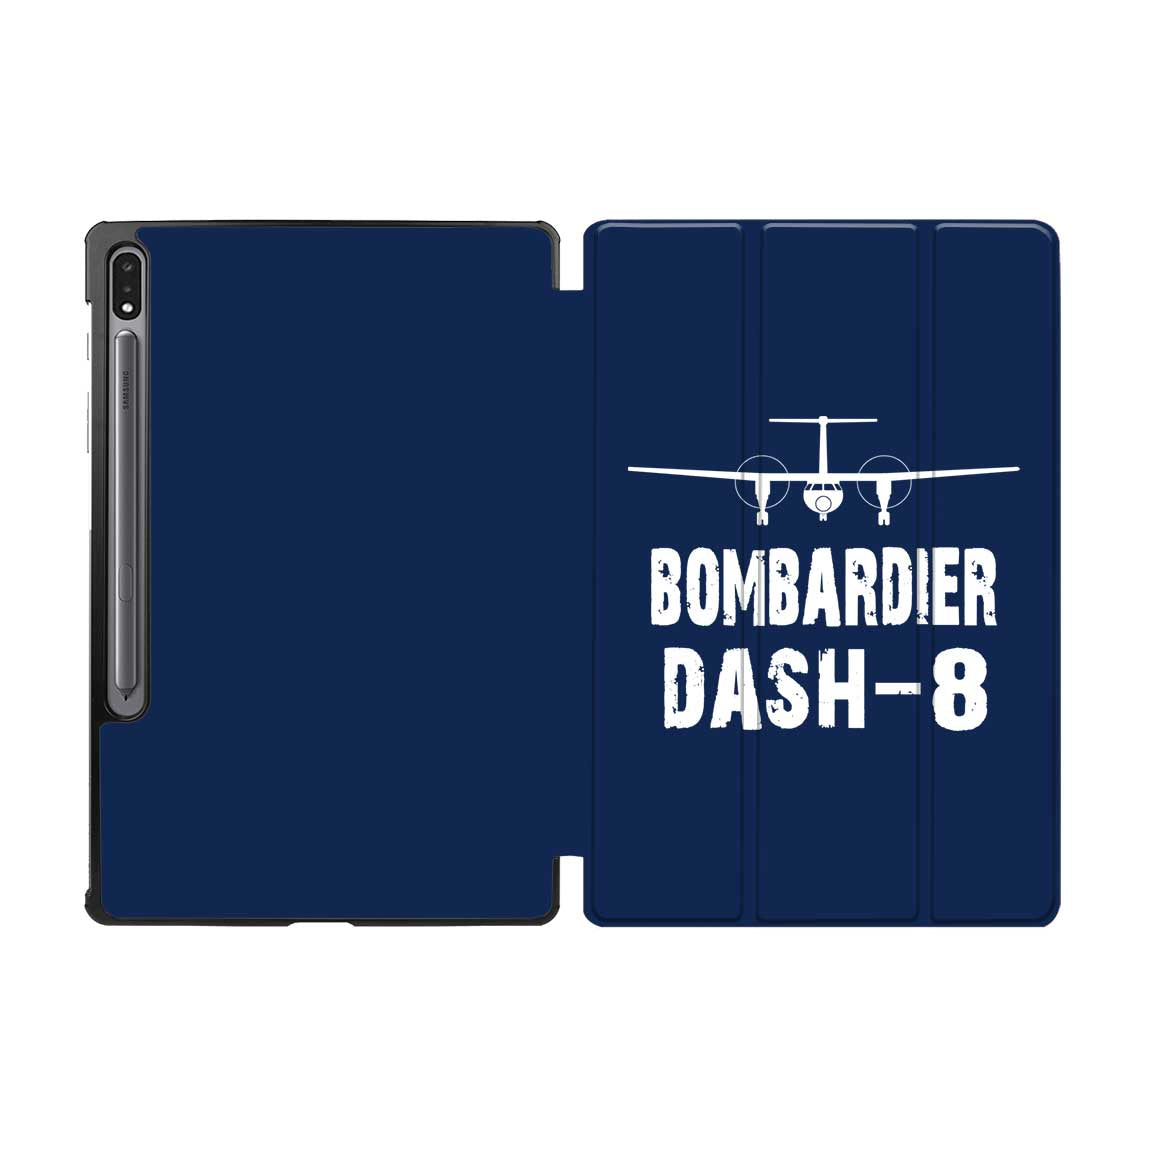 Bombardier Dash-8 & Plane Designed Samsung Tablet Cases